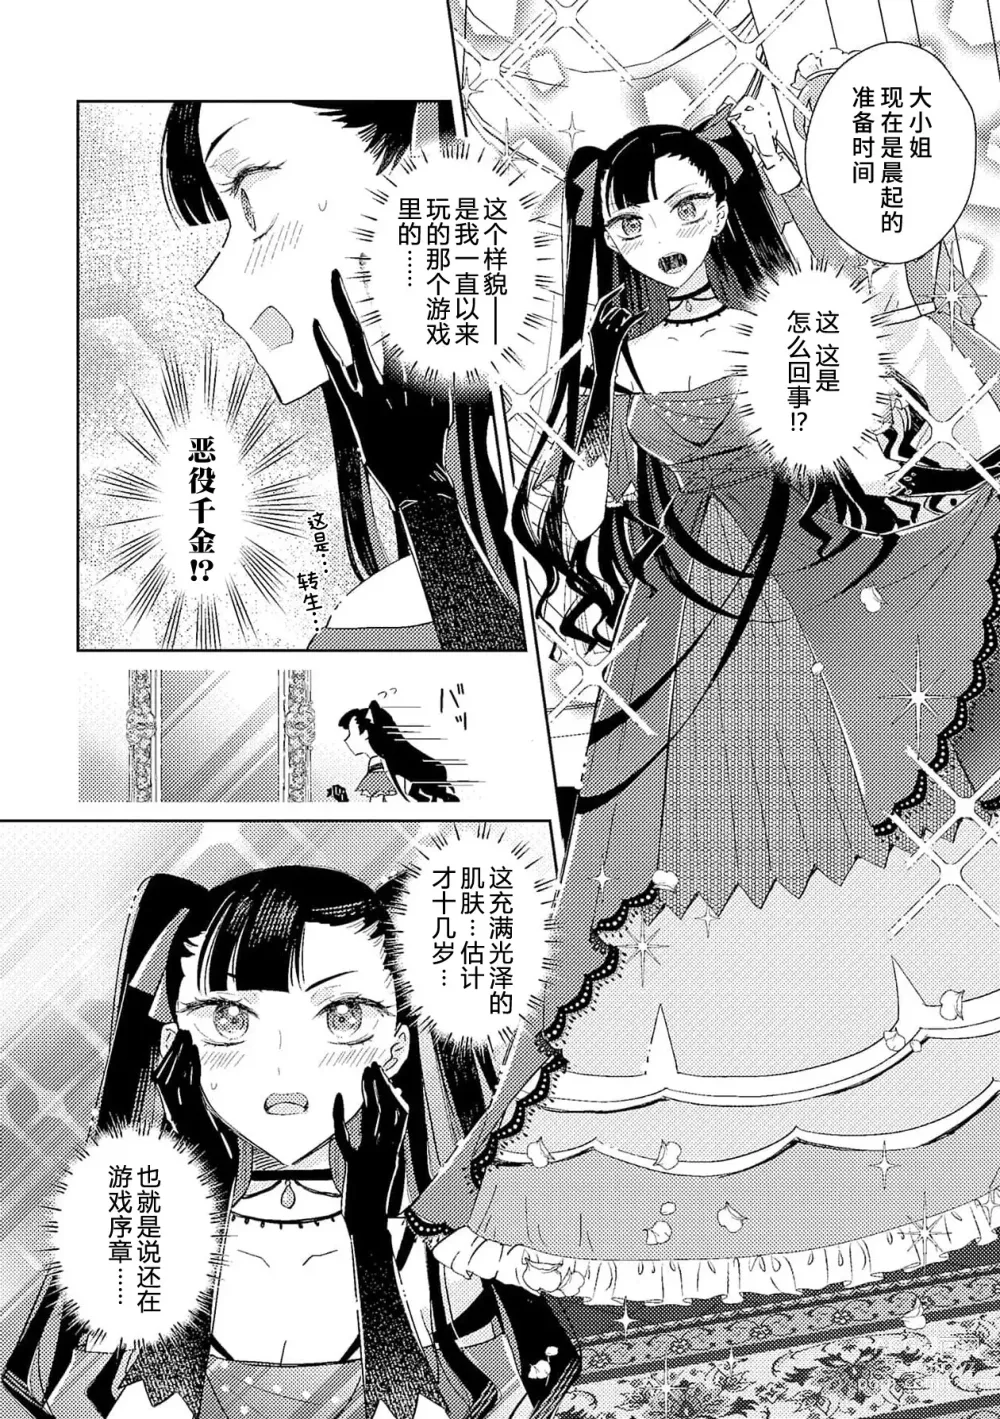 Page 6 of manga 身为恶役千金，堕落于魔界王子身下这条路线真的可以有？ 1-7